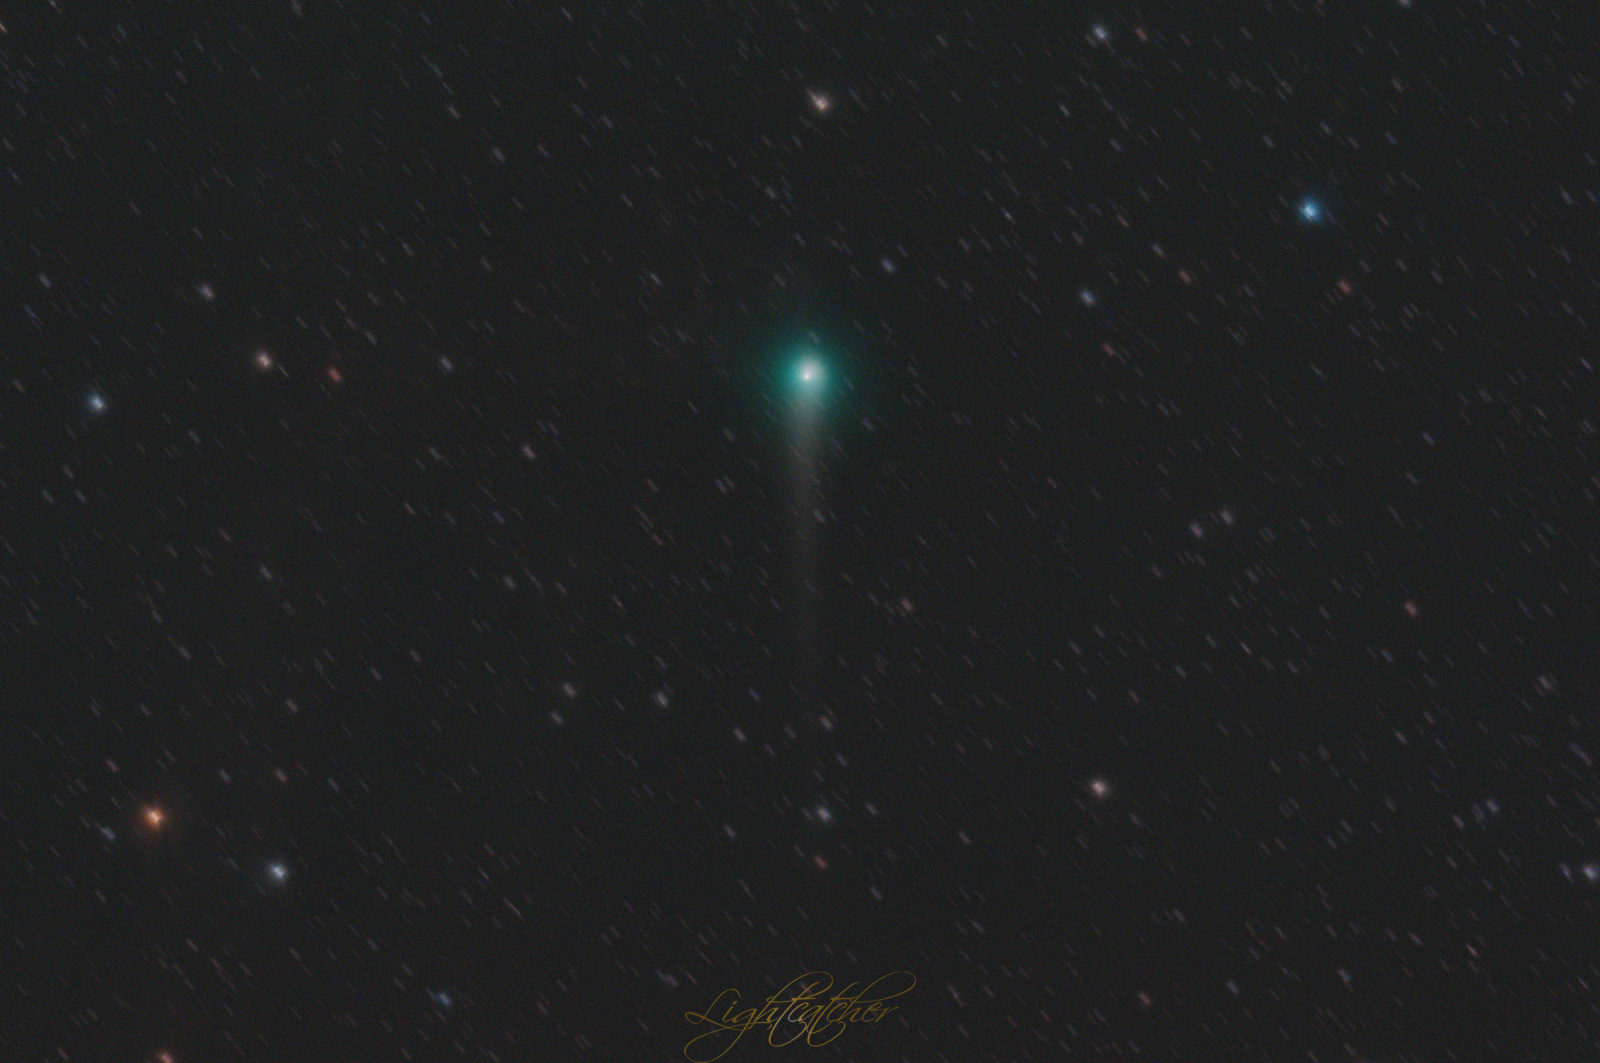 PANSTARRS__55min_33_fr_50s_comet_stack_sml_logo.jpg